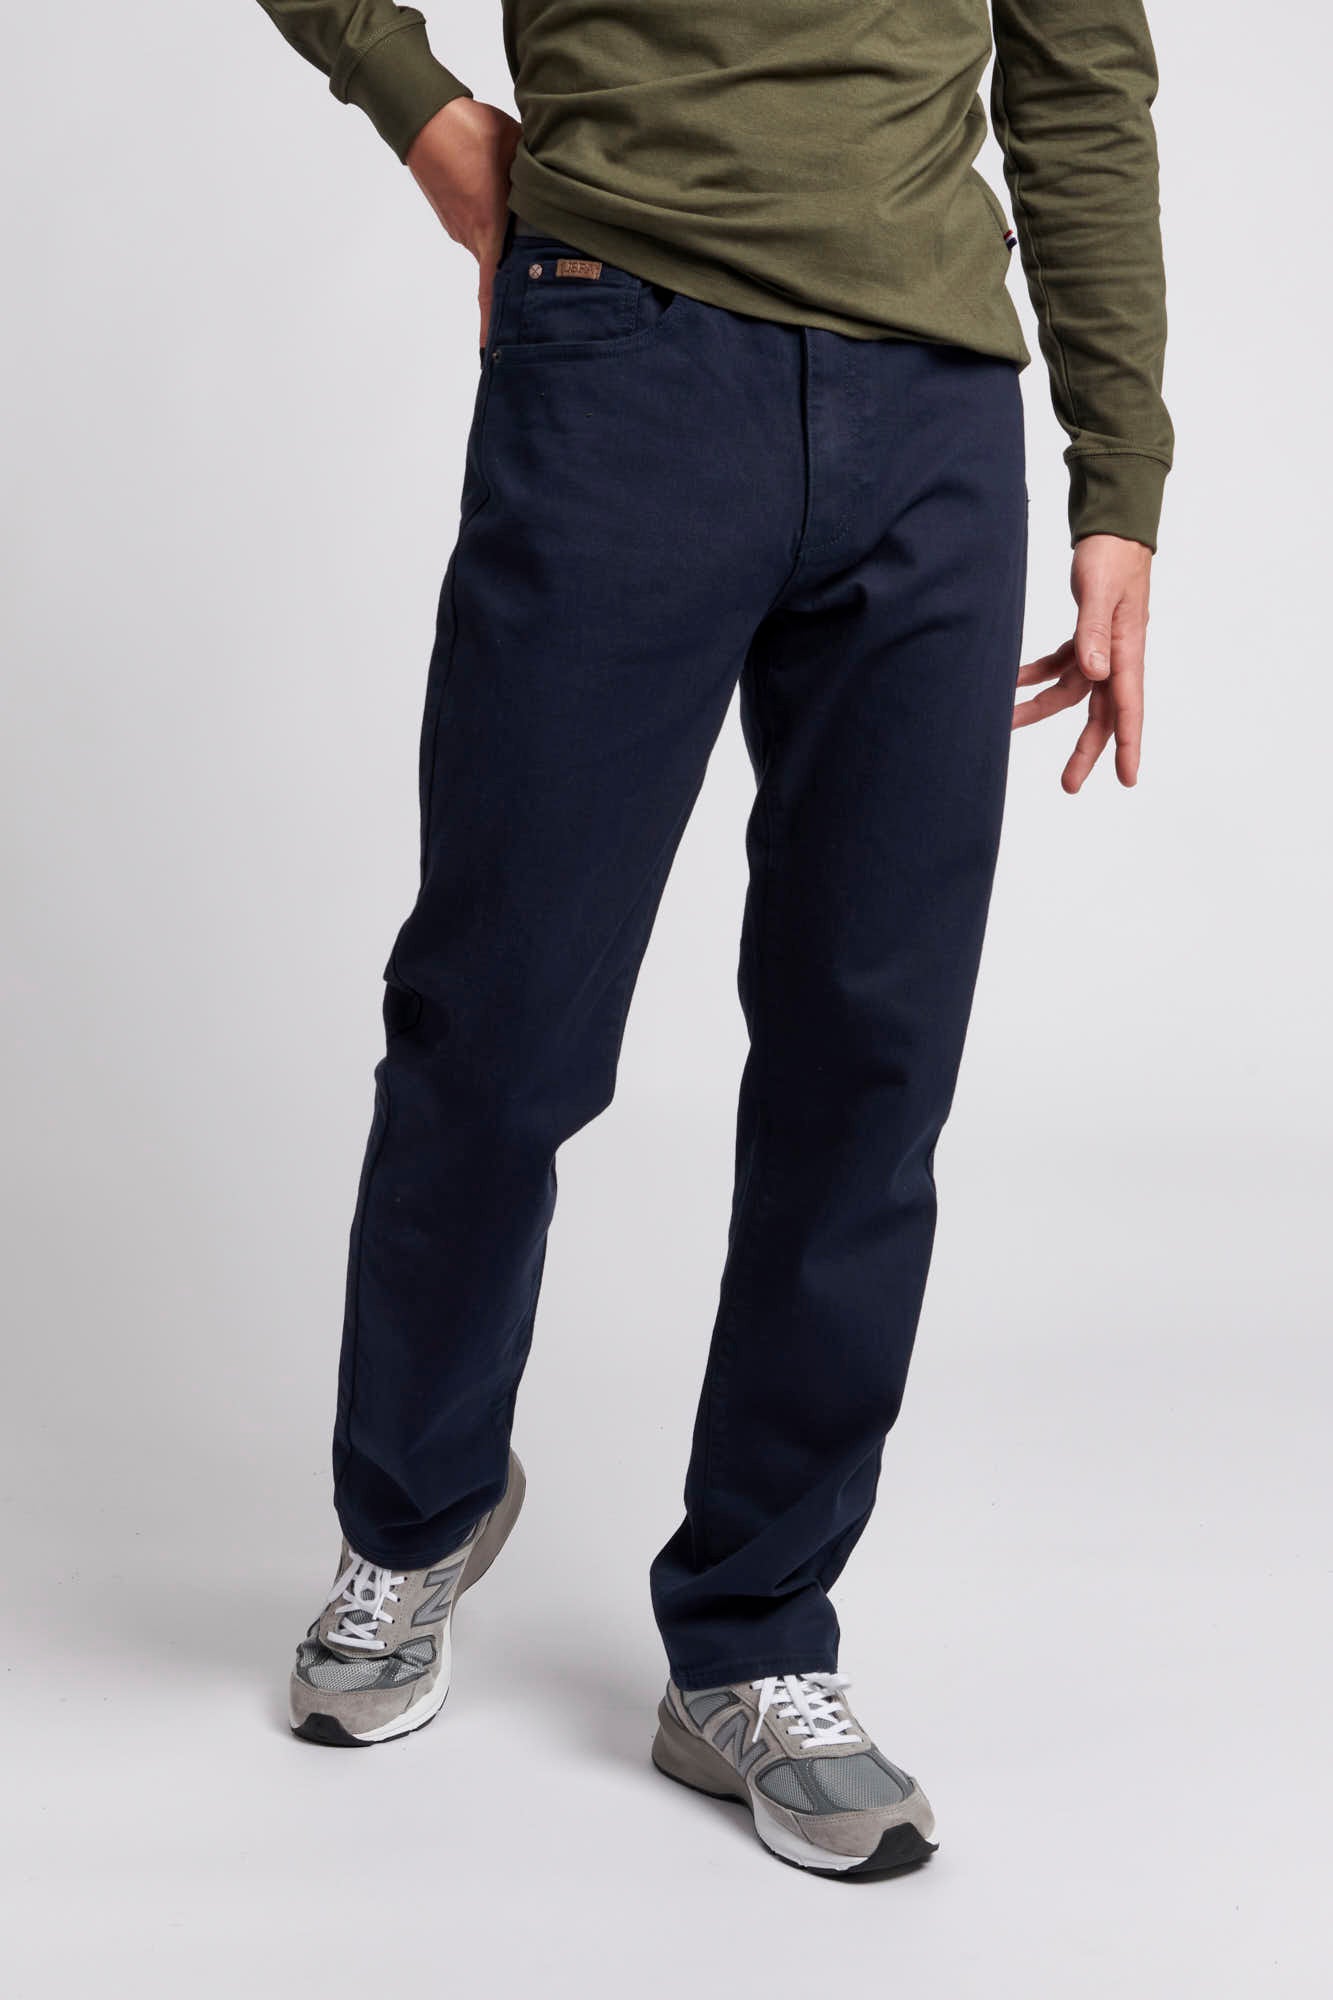 U.S. Polo Assn. Mens 5 Pocket Slub Twill Trousers in Navy Blue